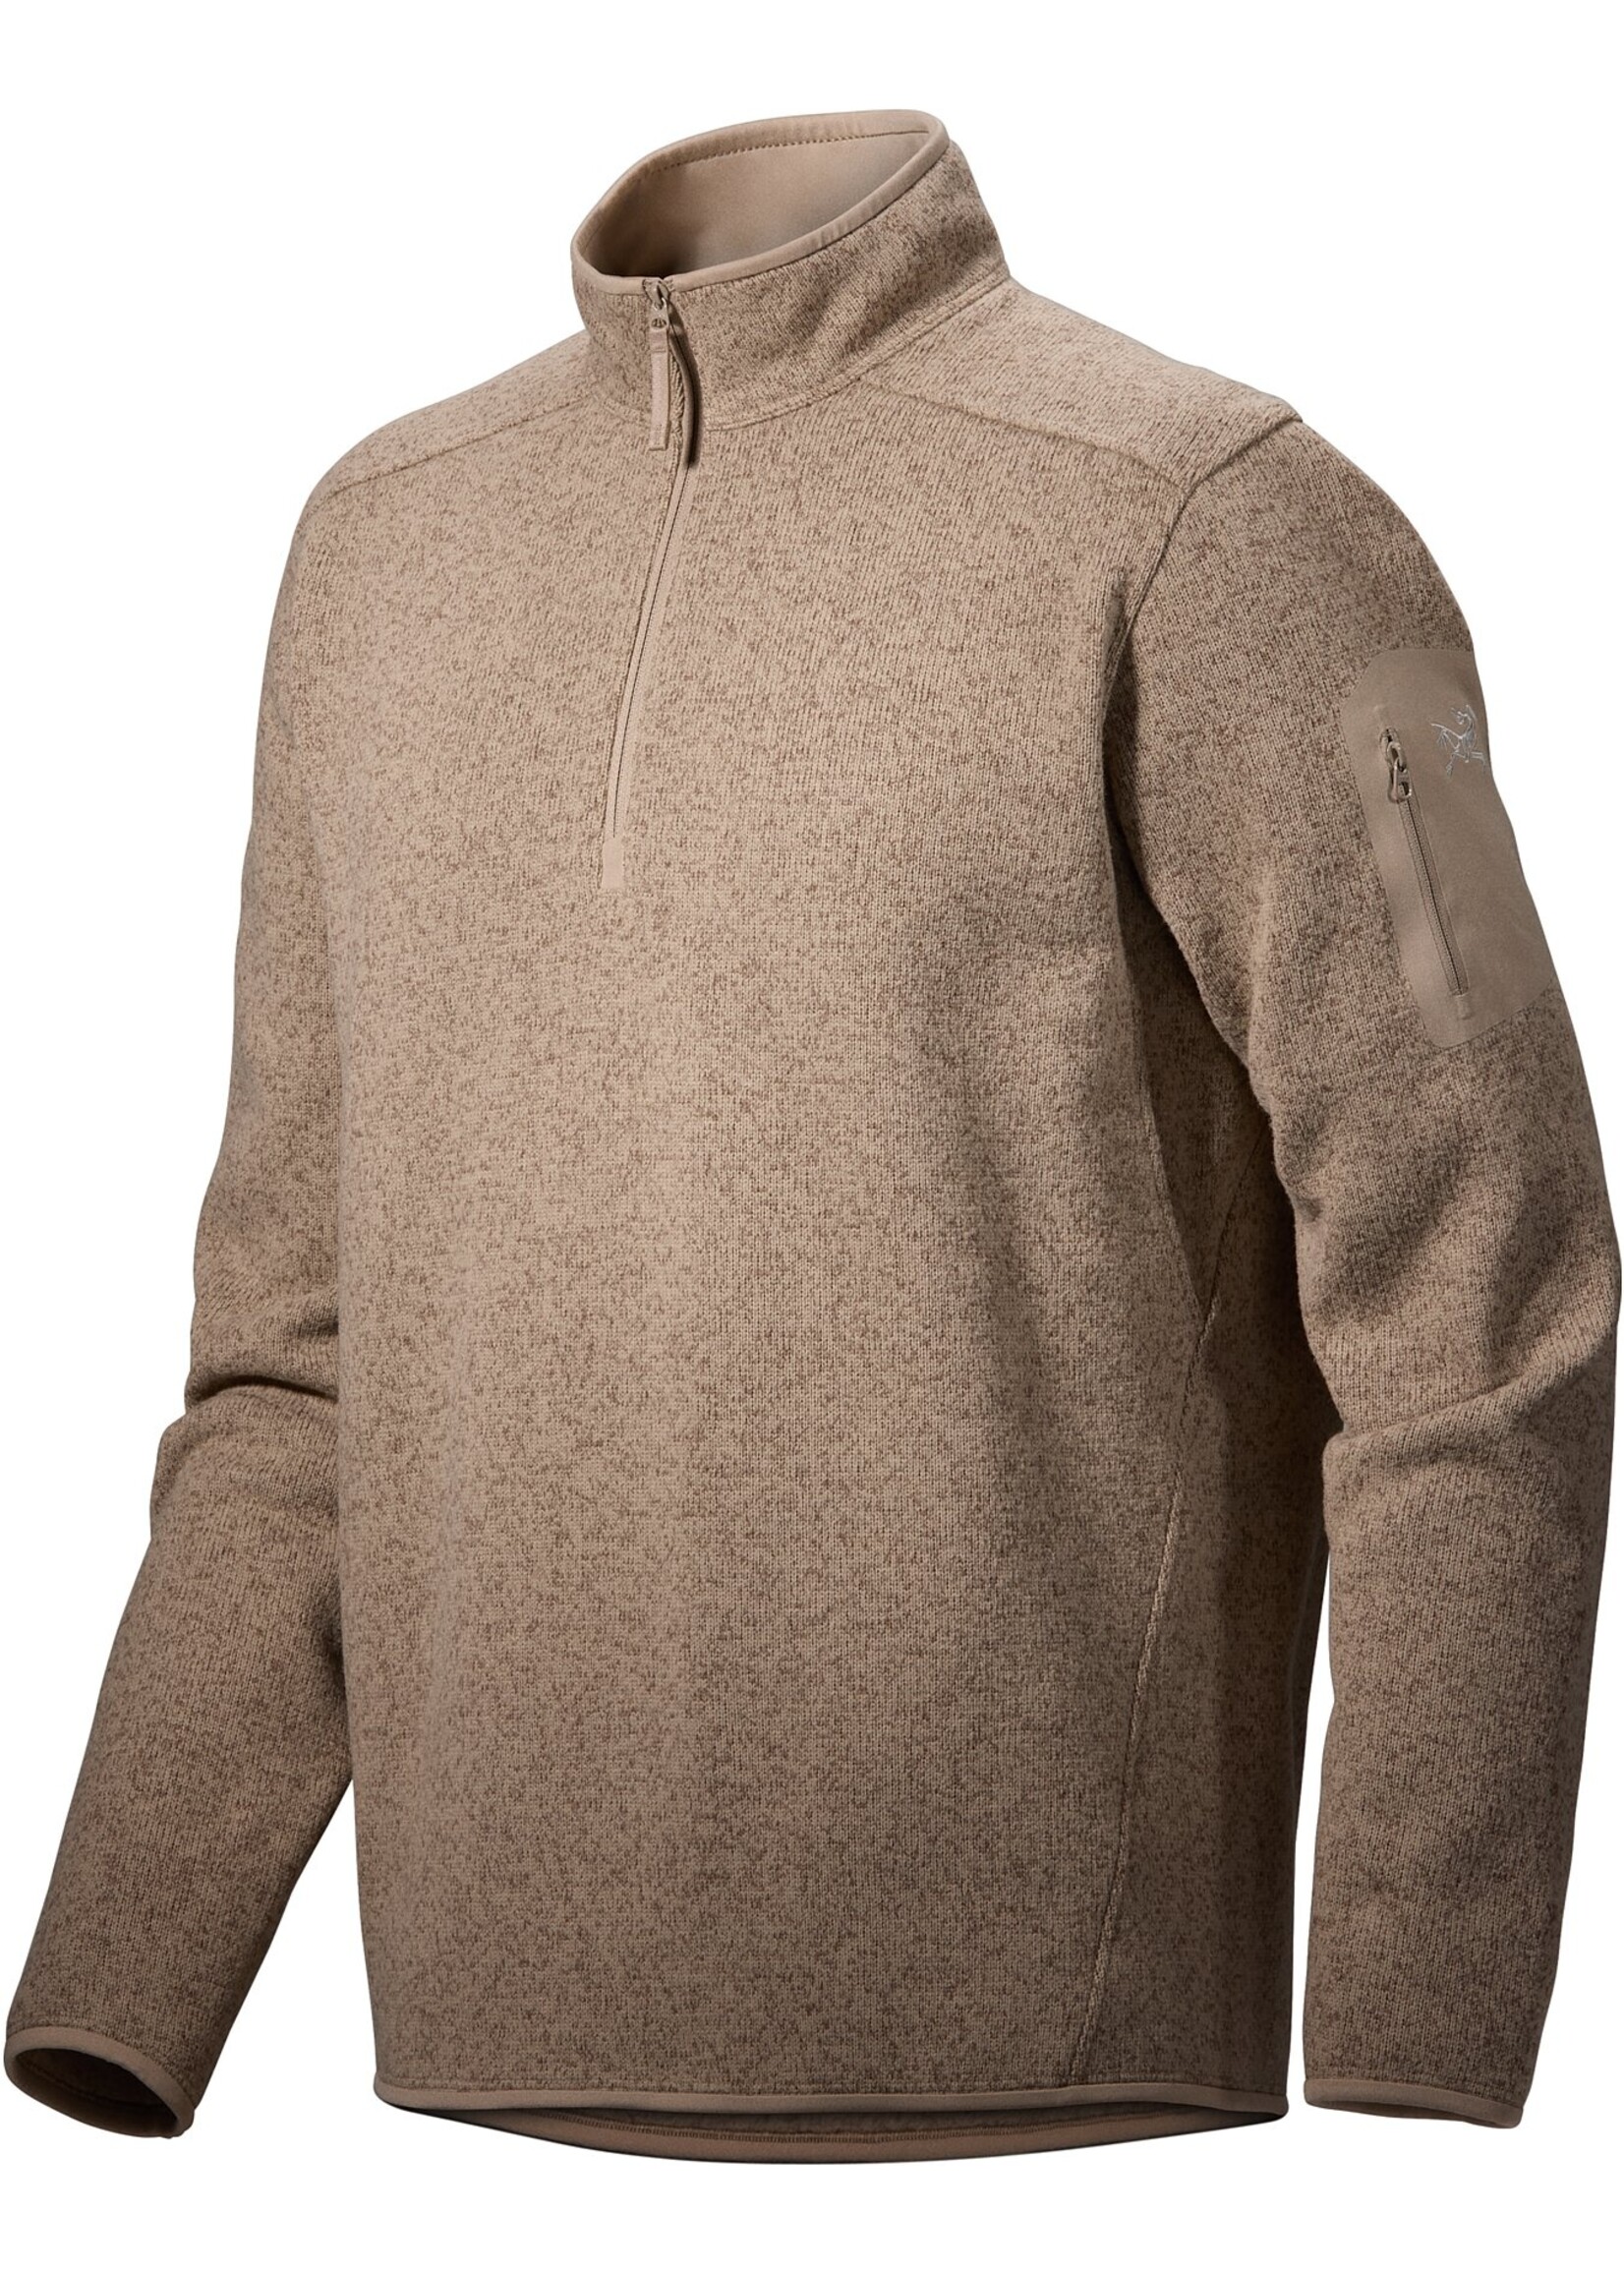 Arc'teryx Arc'teryx M's Covert 1/2 Zip Sweater